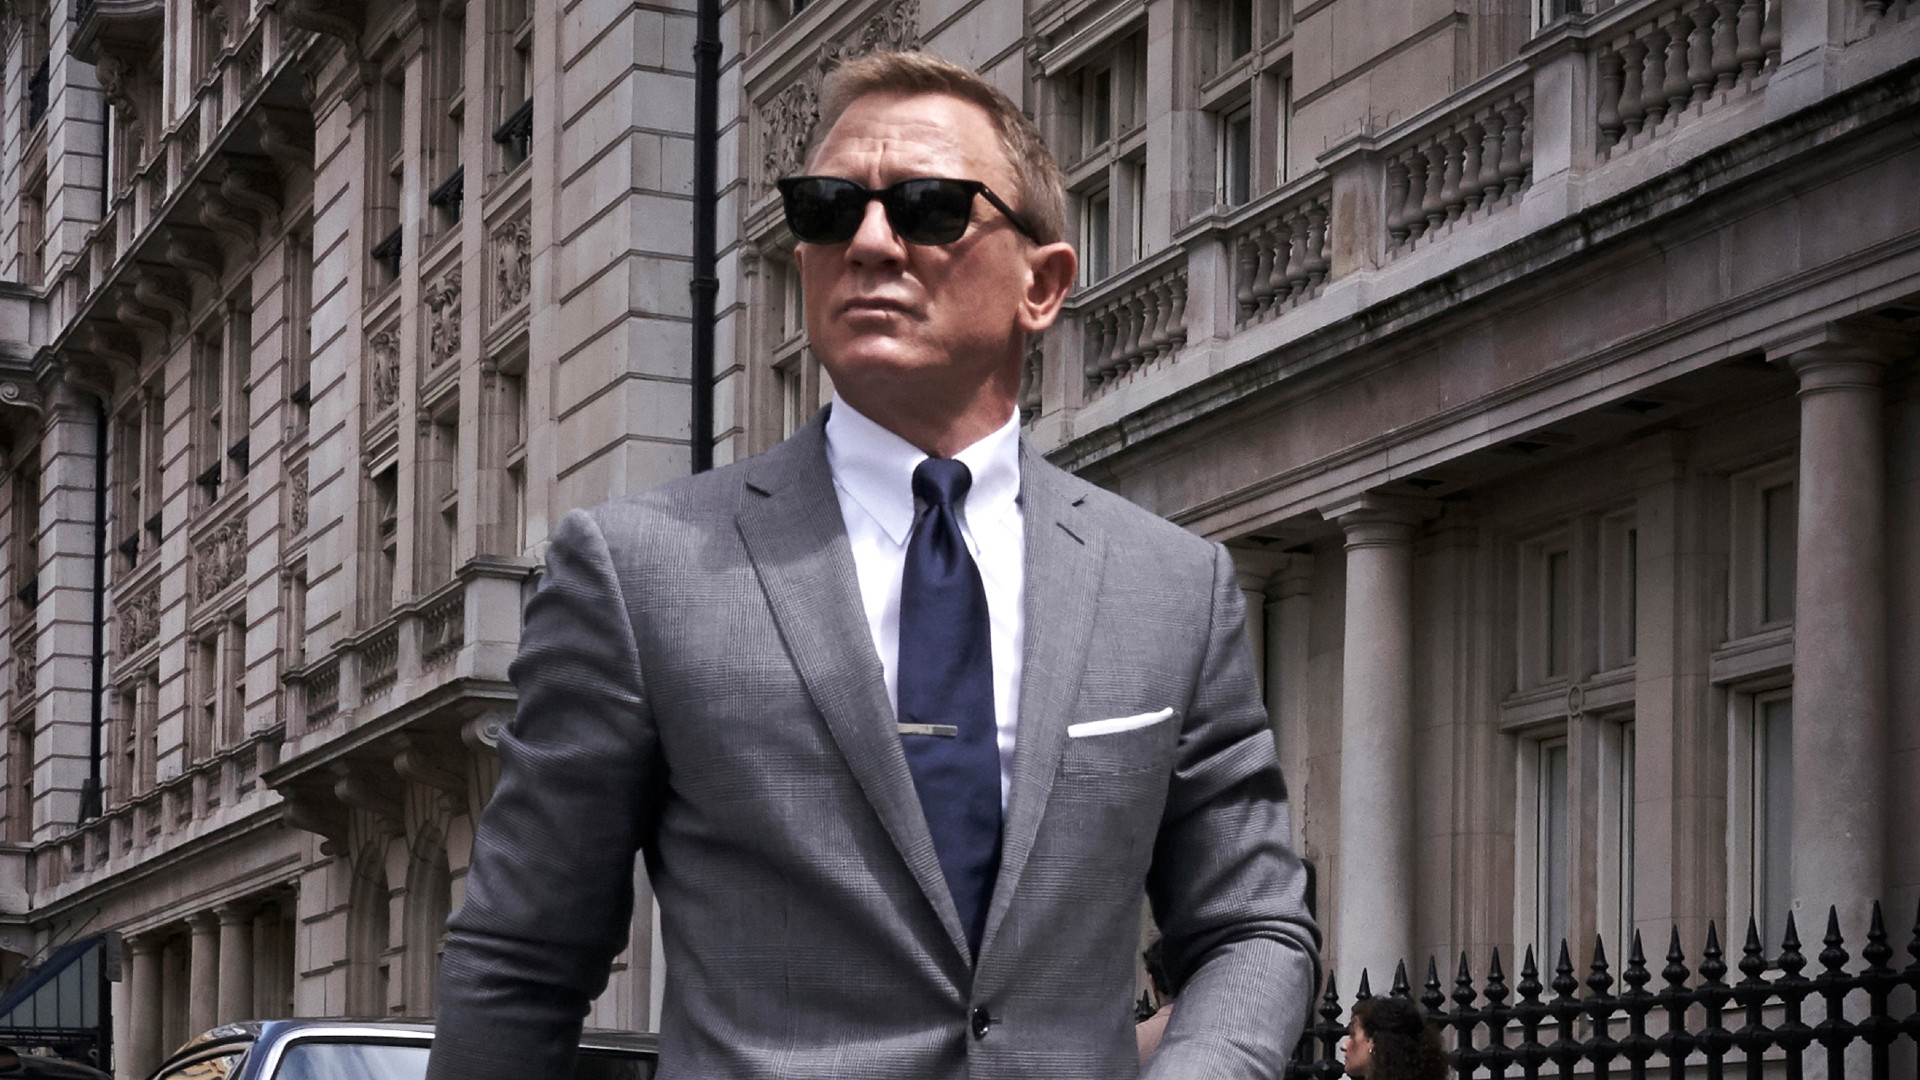 Daniel Craig in new James Bond movie No Time to Die